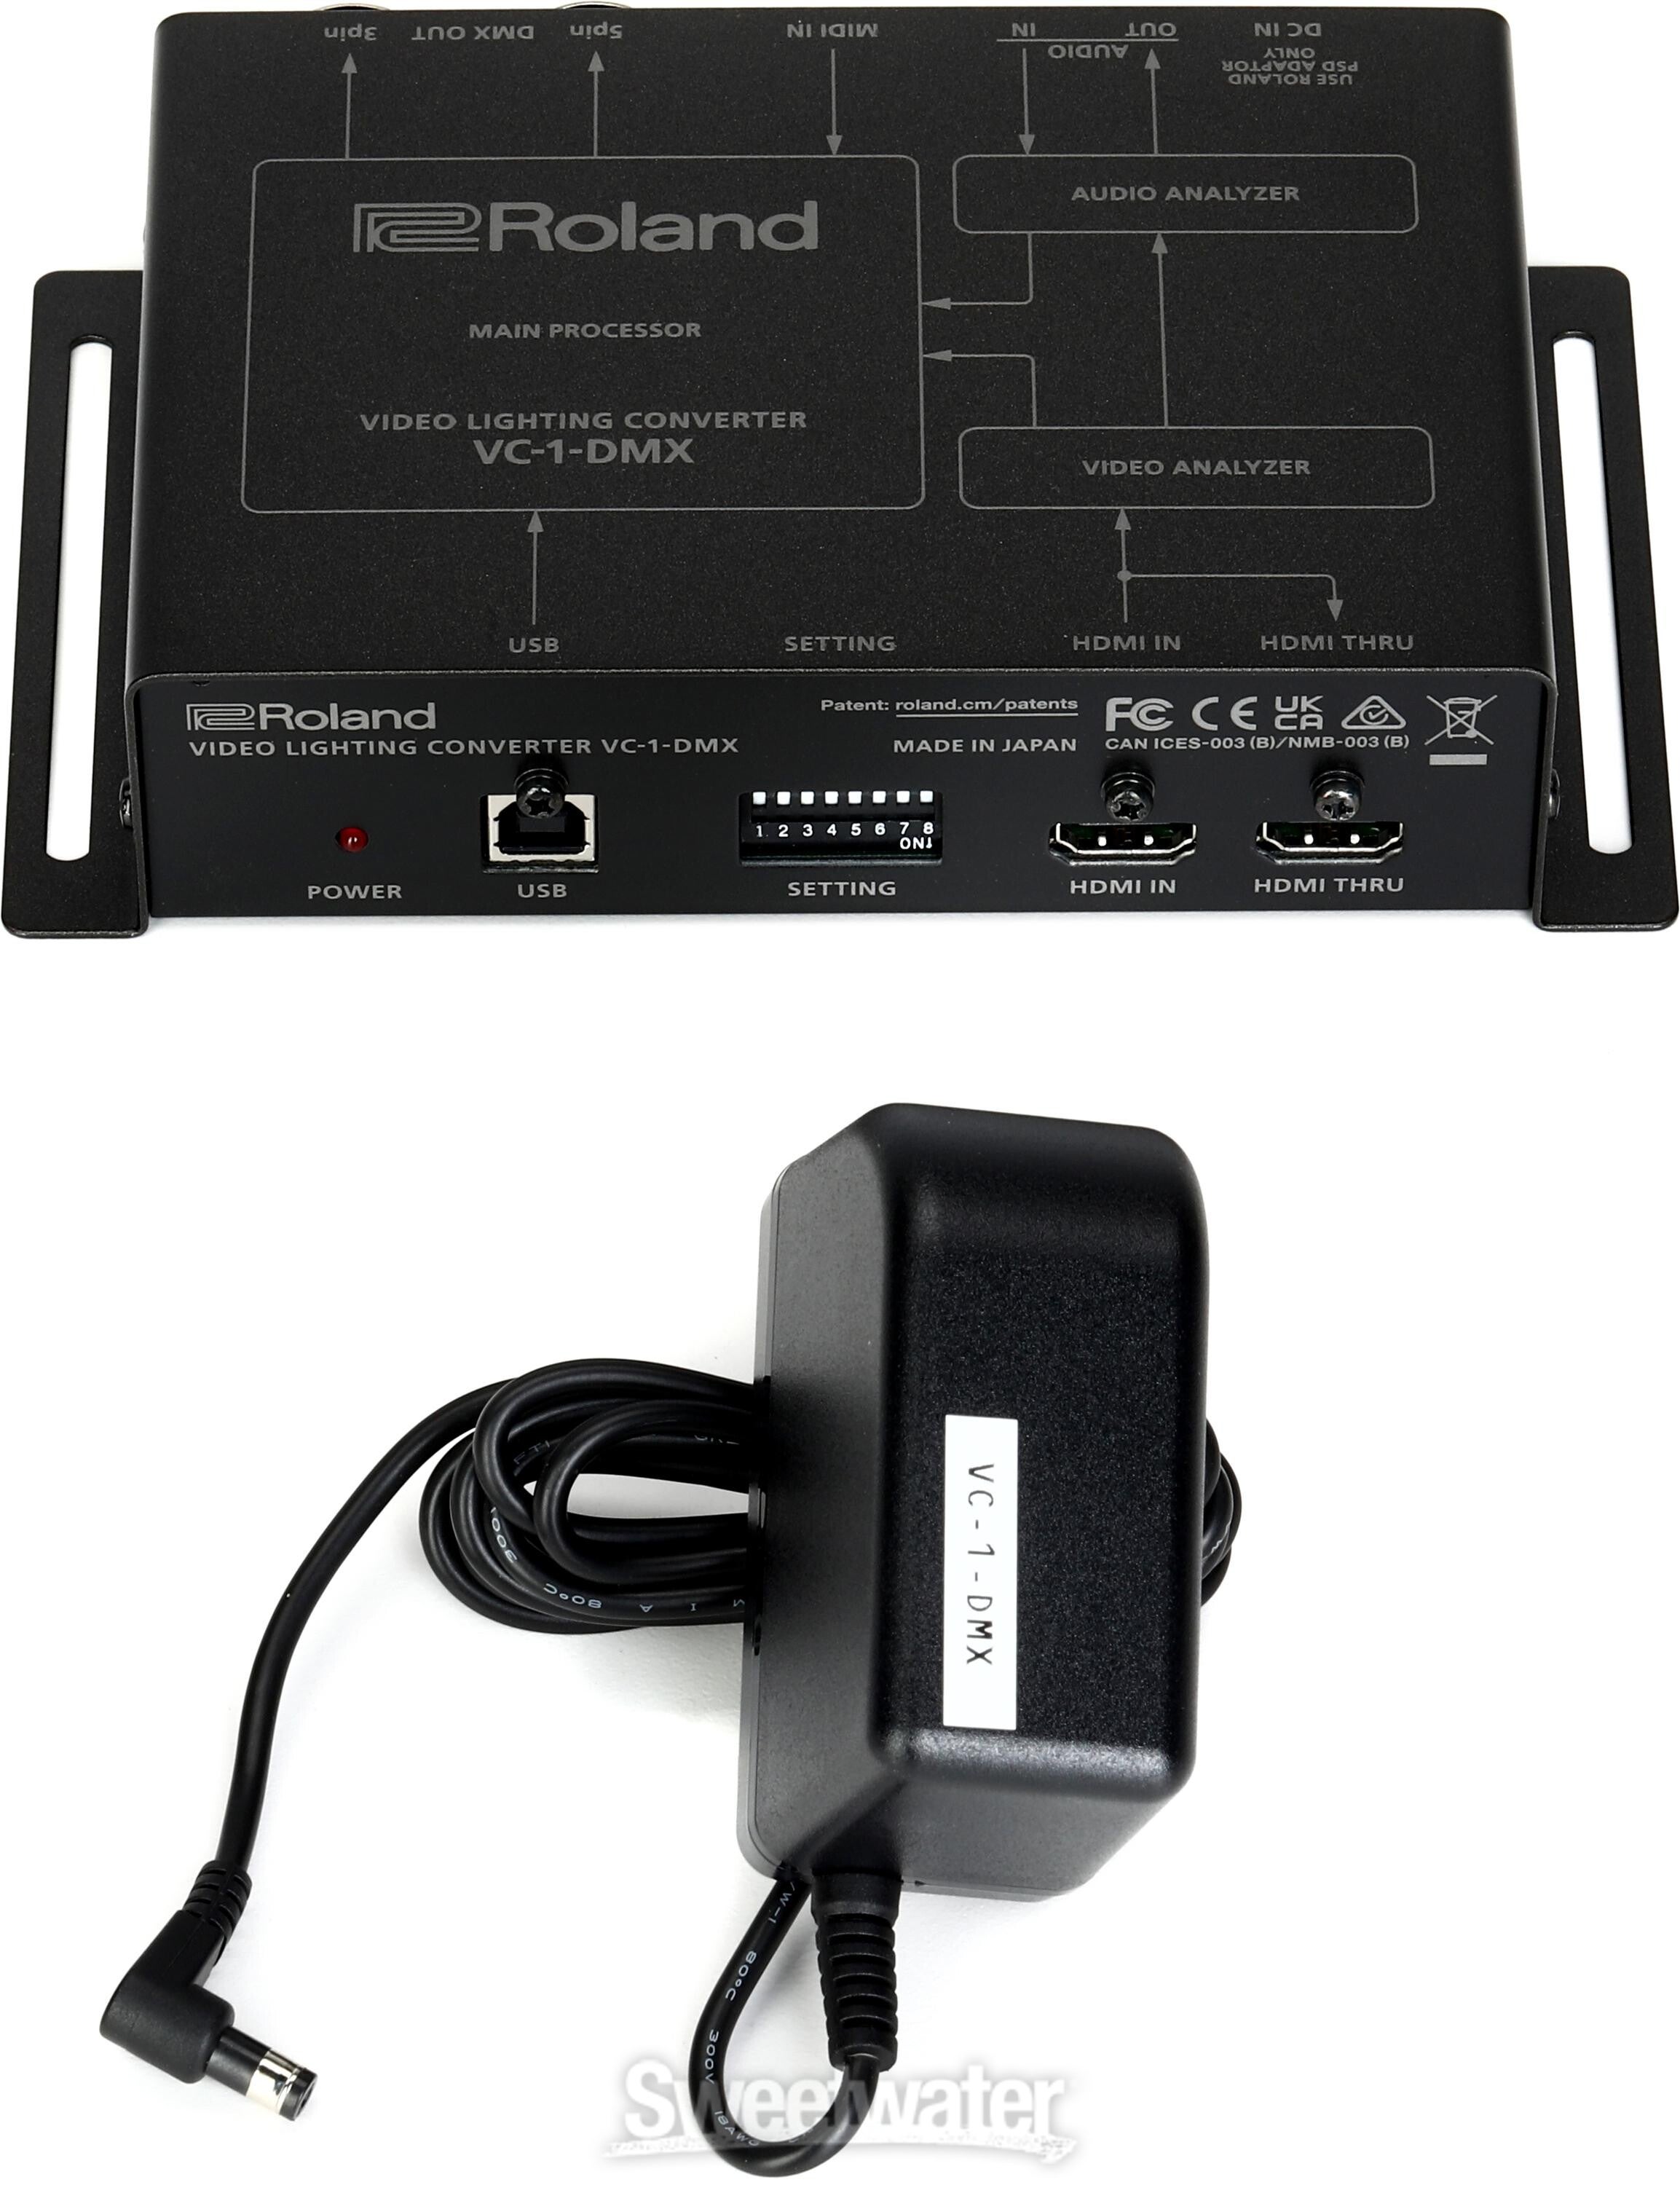 Roland VC-1-DMX Video Lighting Converter | Sweetwater